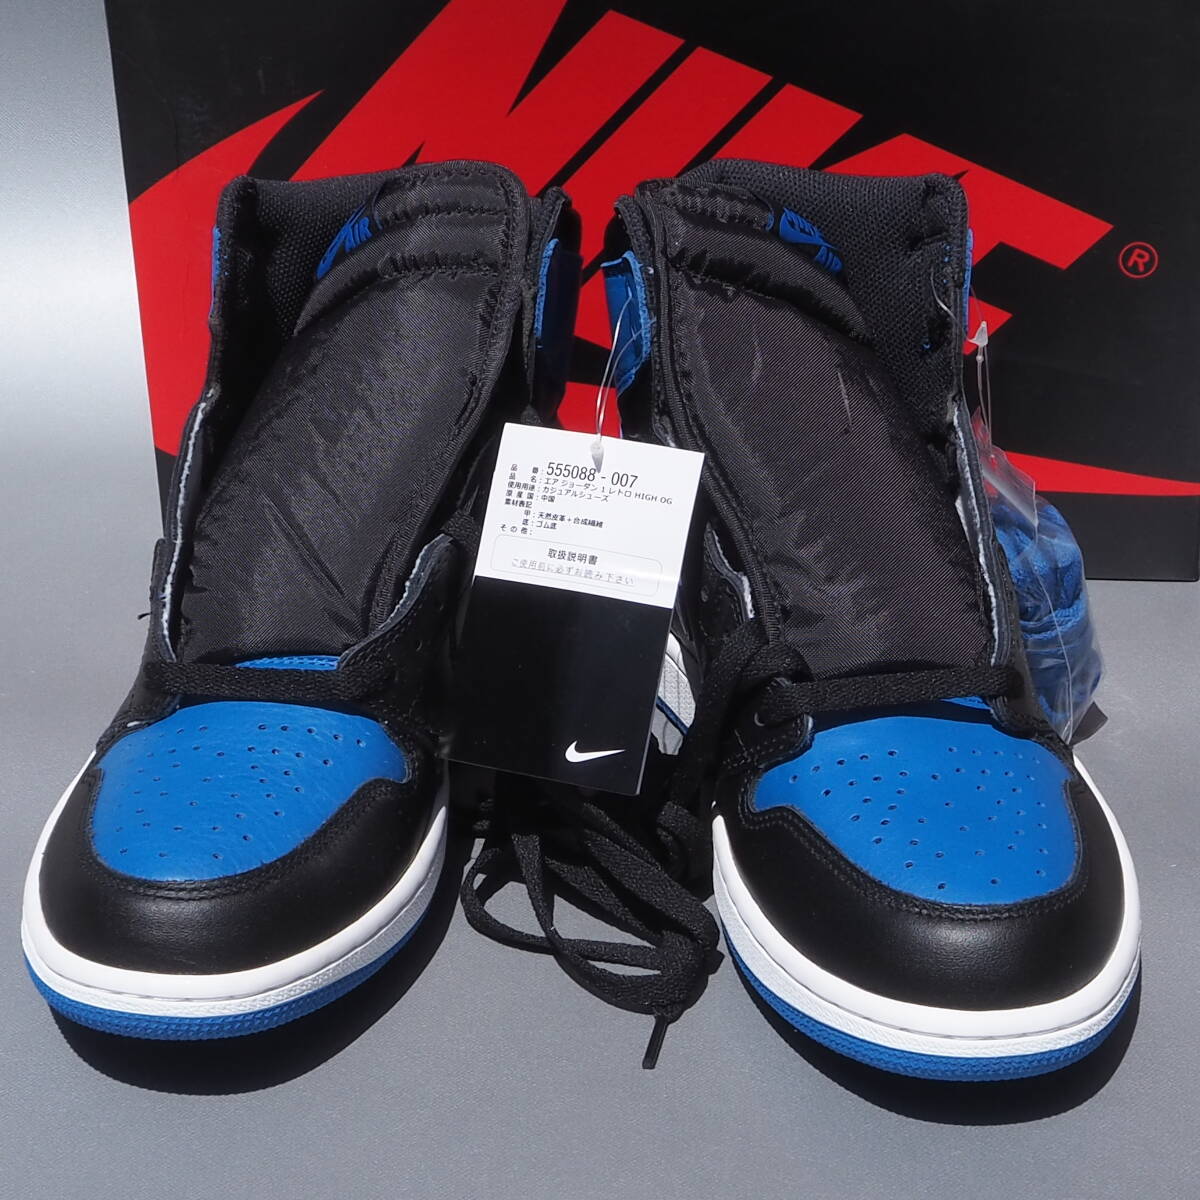  dead!! US 11 / 29cm new goods black tag NIKE AIR JORDAN 1 RETRO HIGH OG ROYAL Nike air Jordan one retro high 555088-007 black blue 